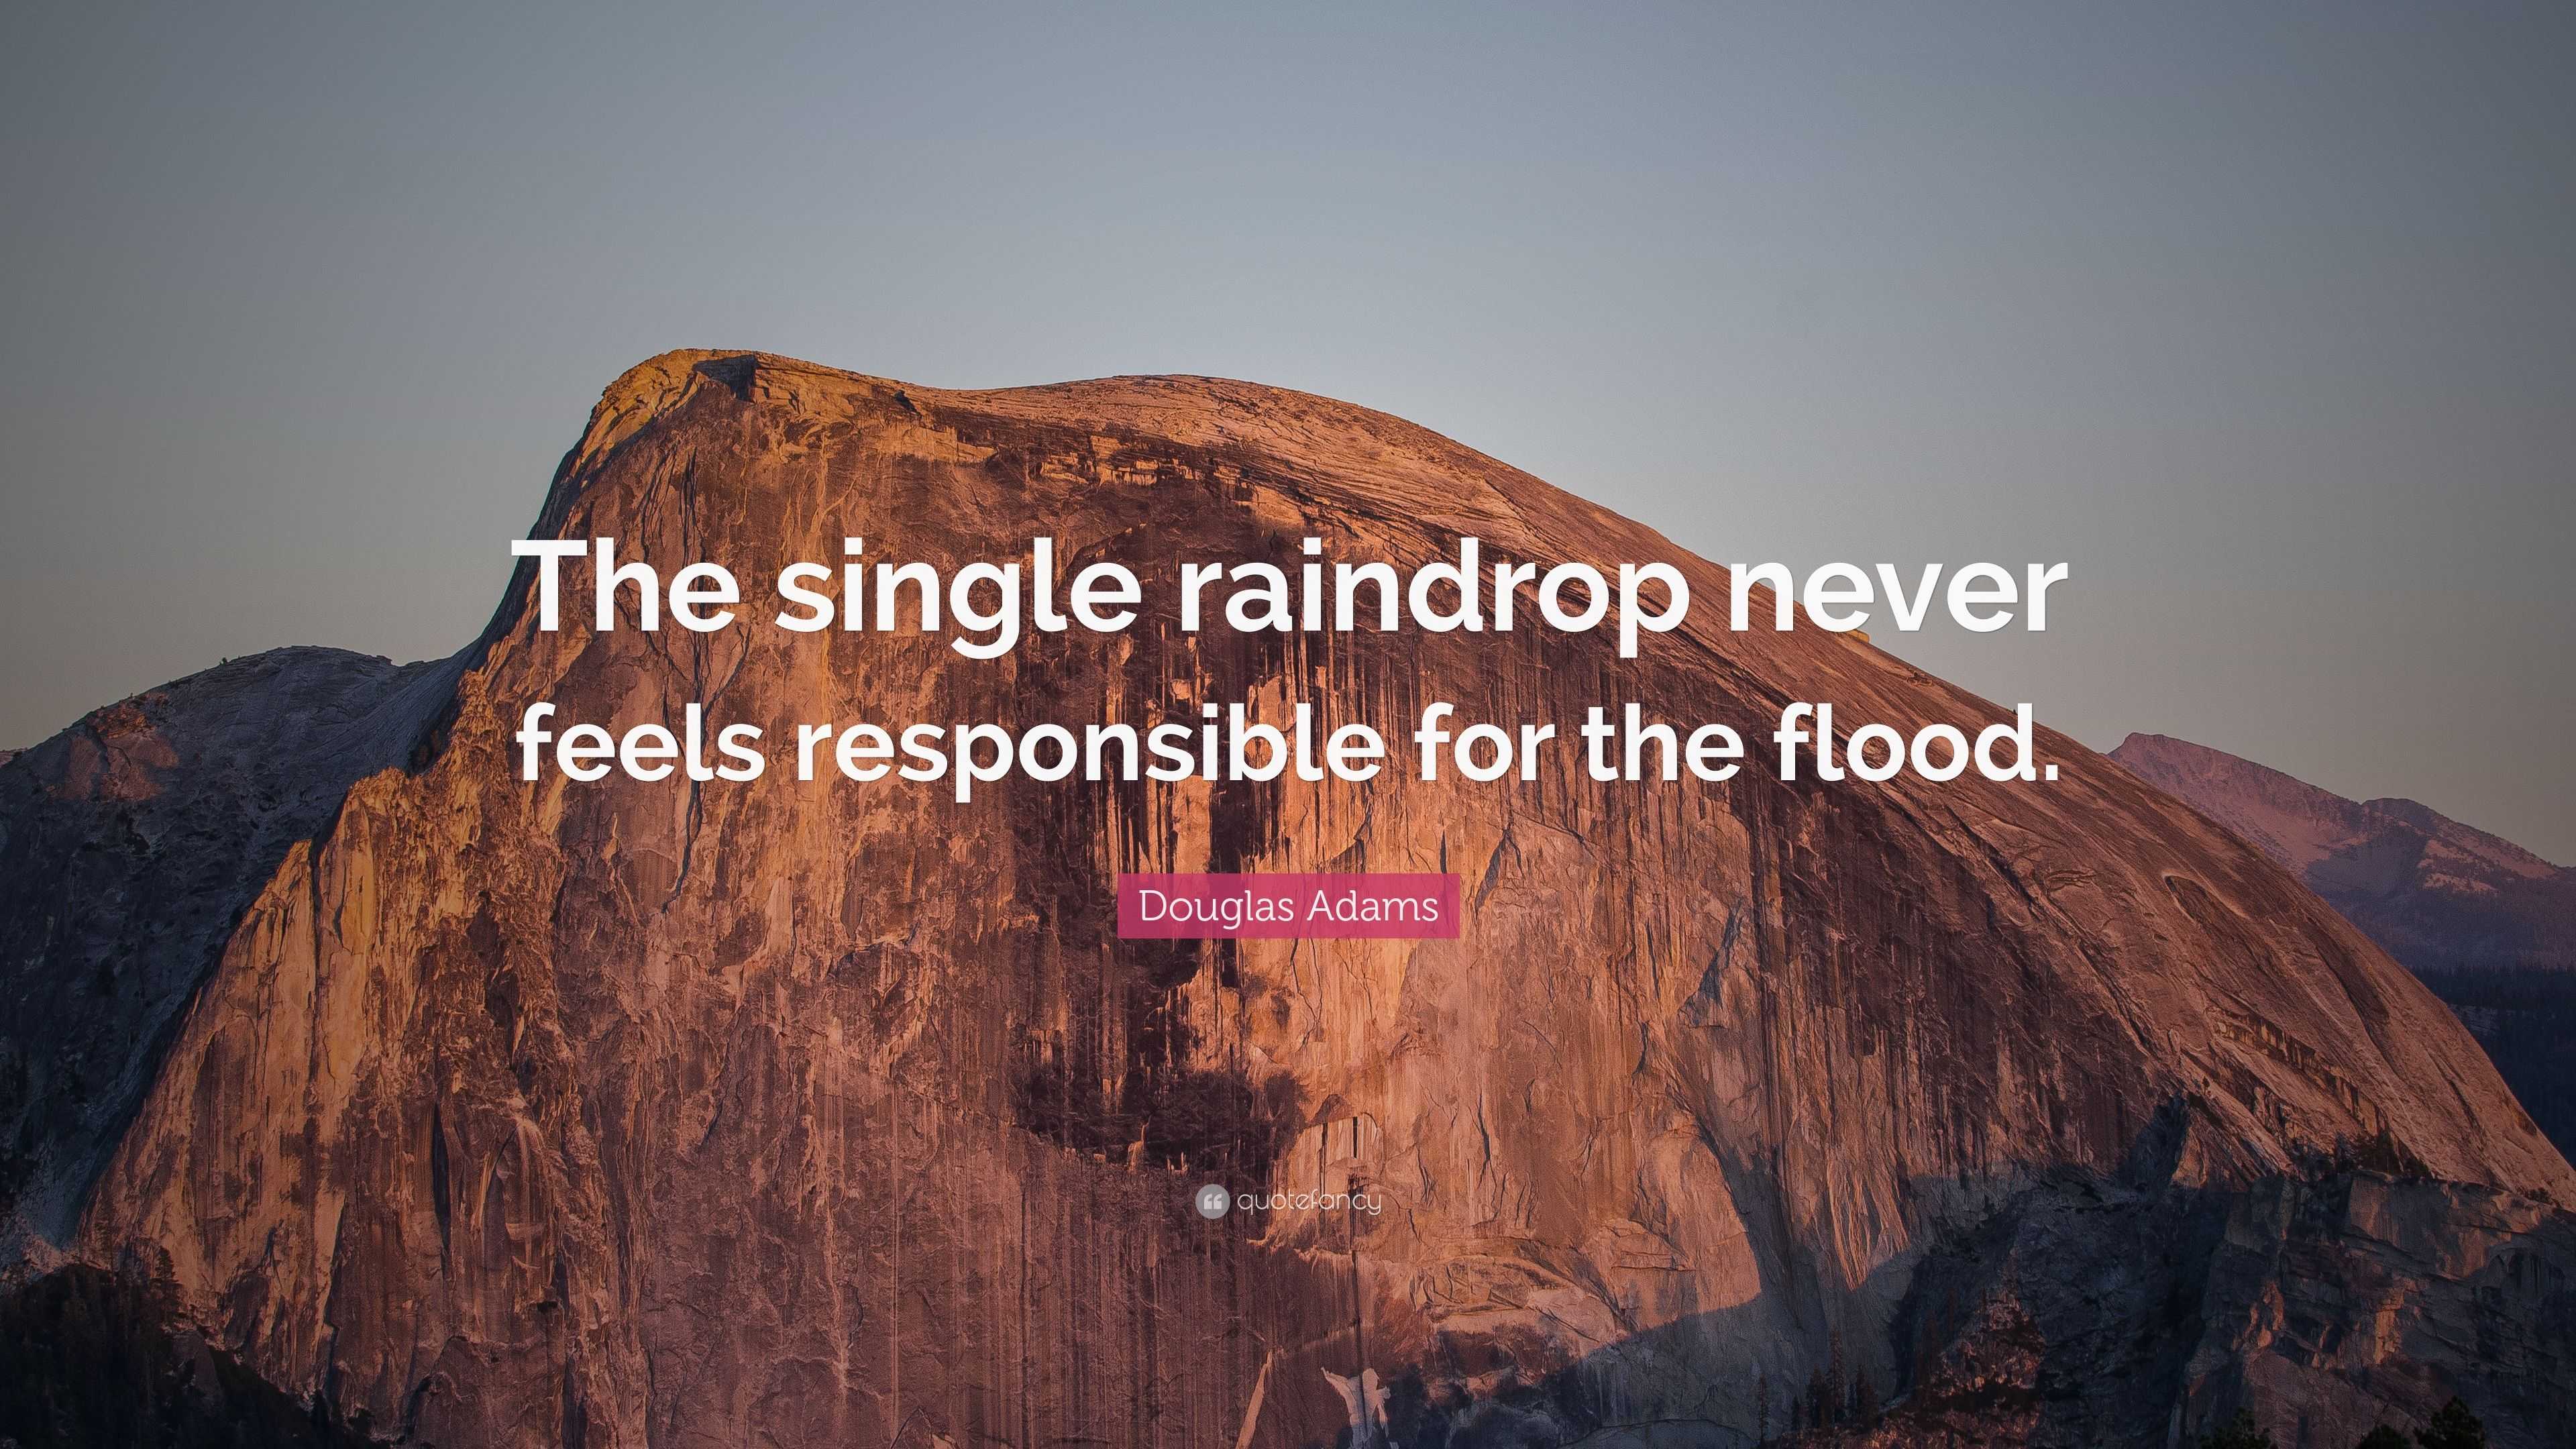 No single raindrop